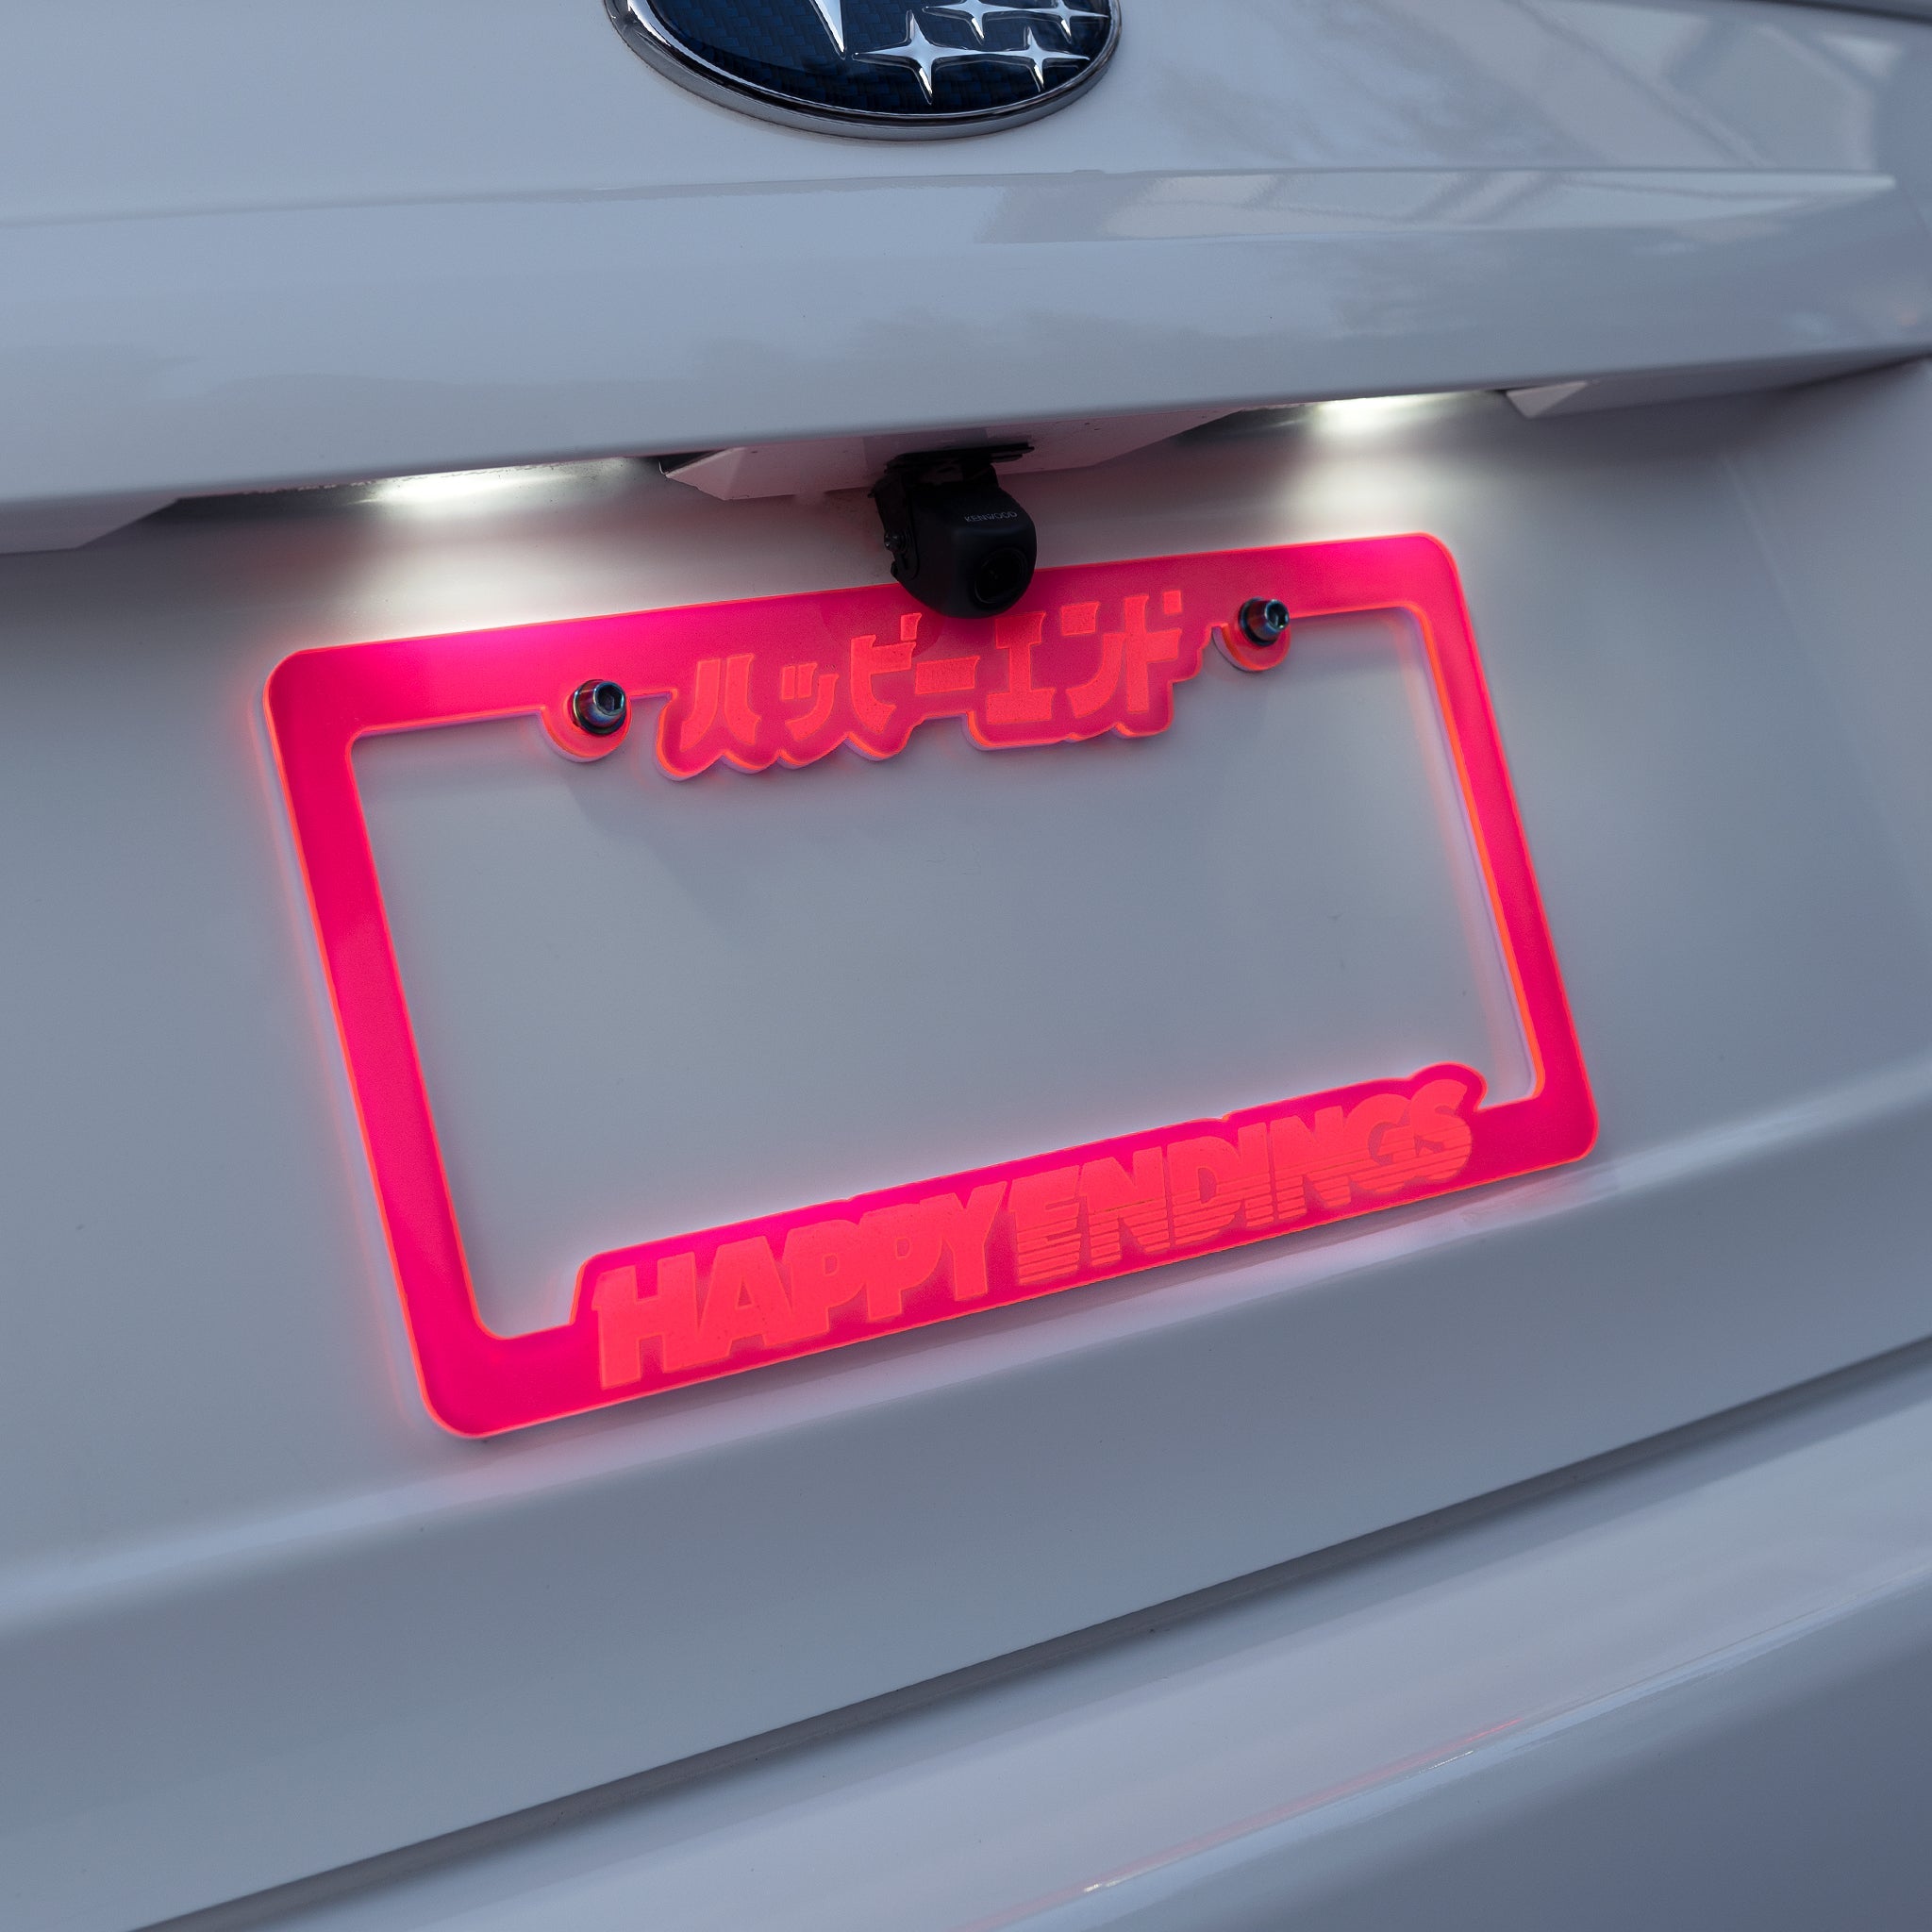 License Plate Frame - Translucent Neon Green